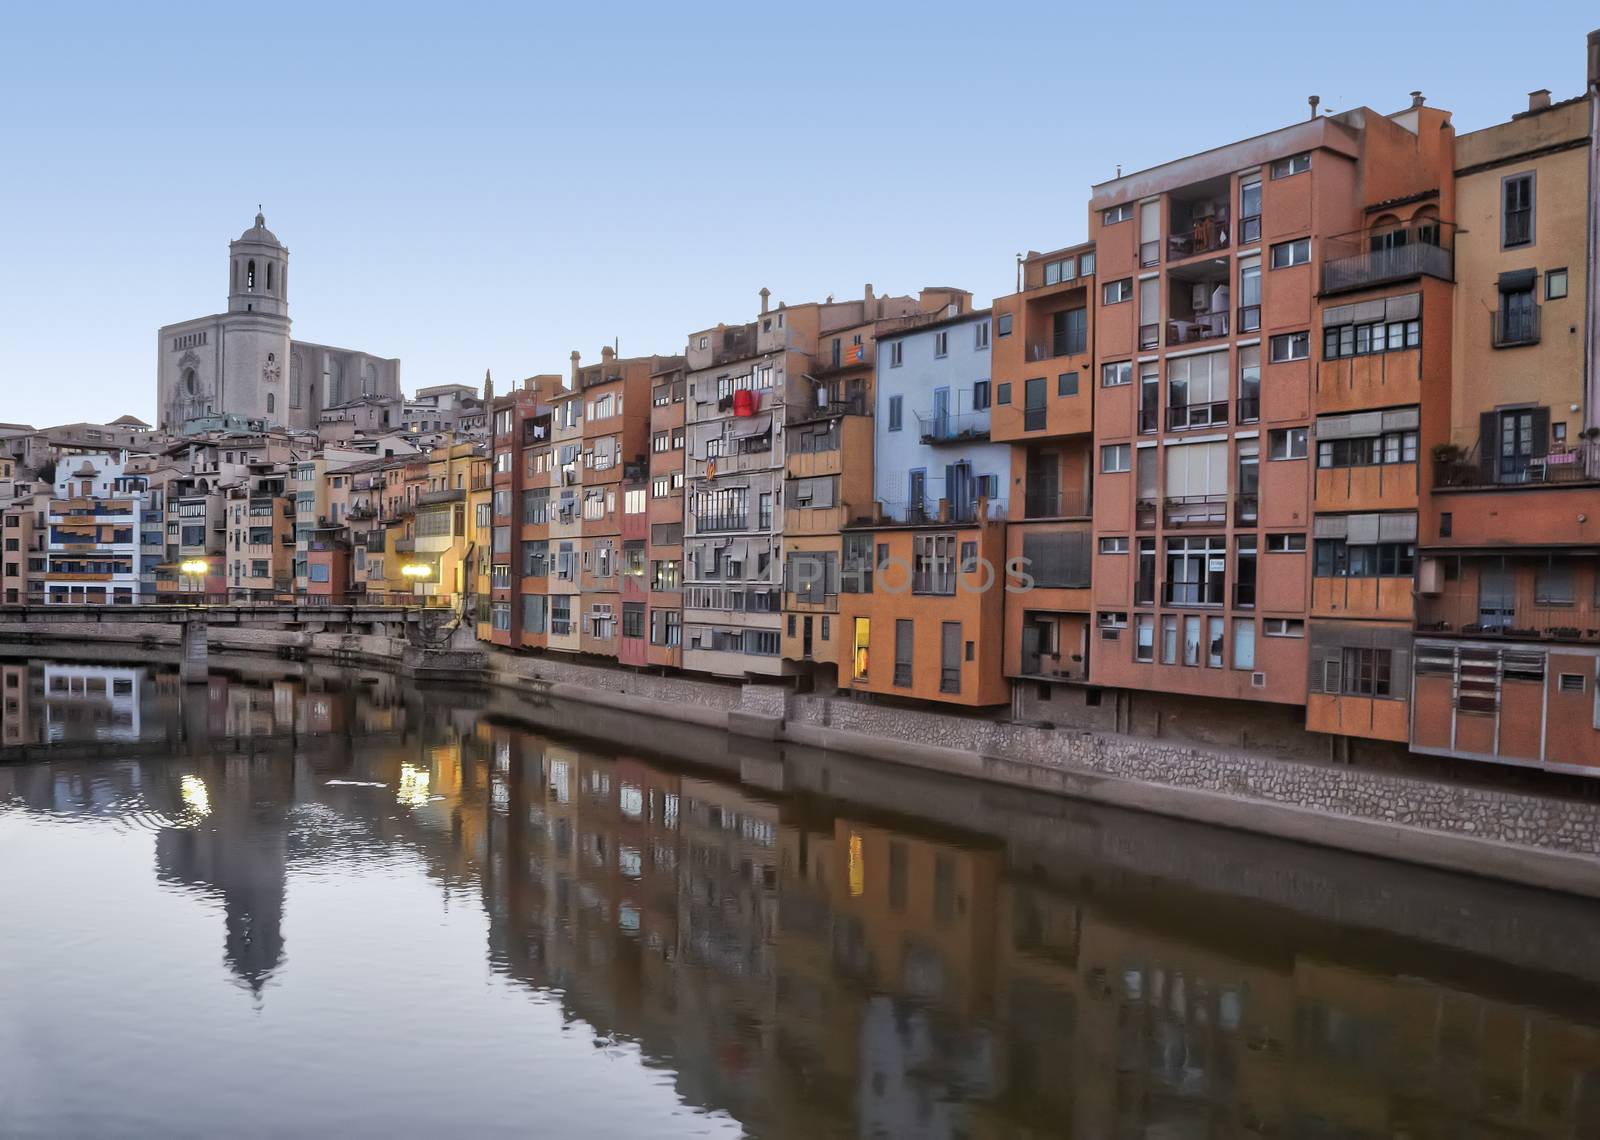 Girona in the Morning by mot1963